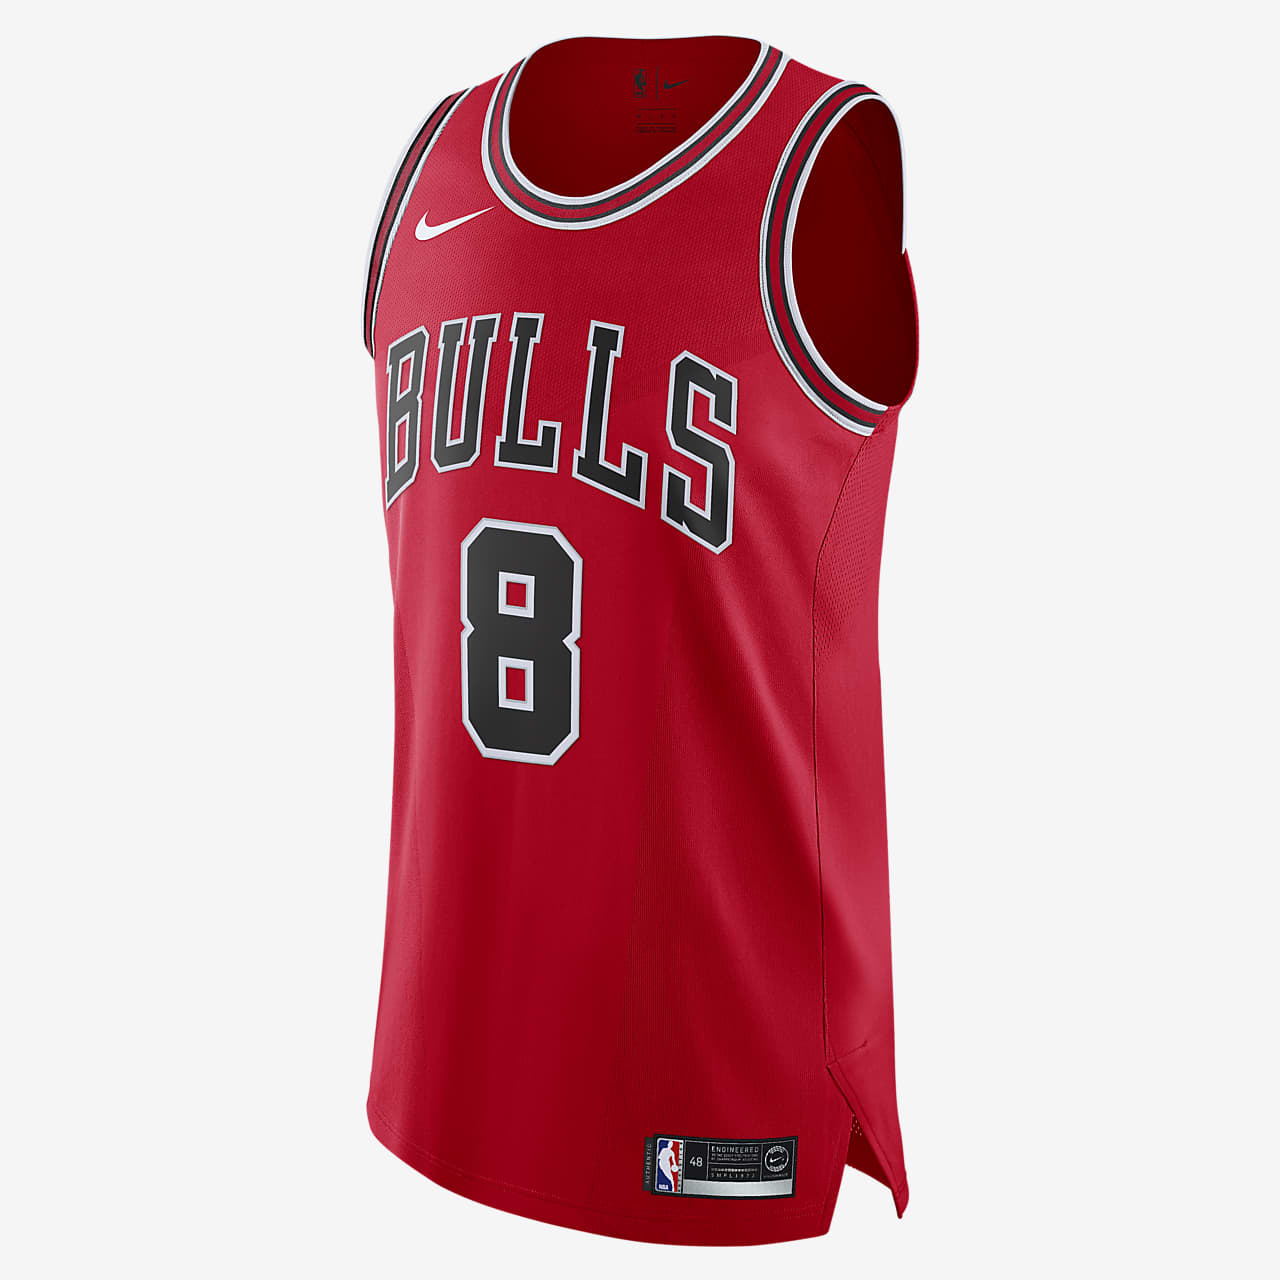 Camiseta Nike NBA Authentic Bulls Icon Nike.com